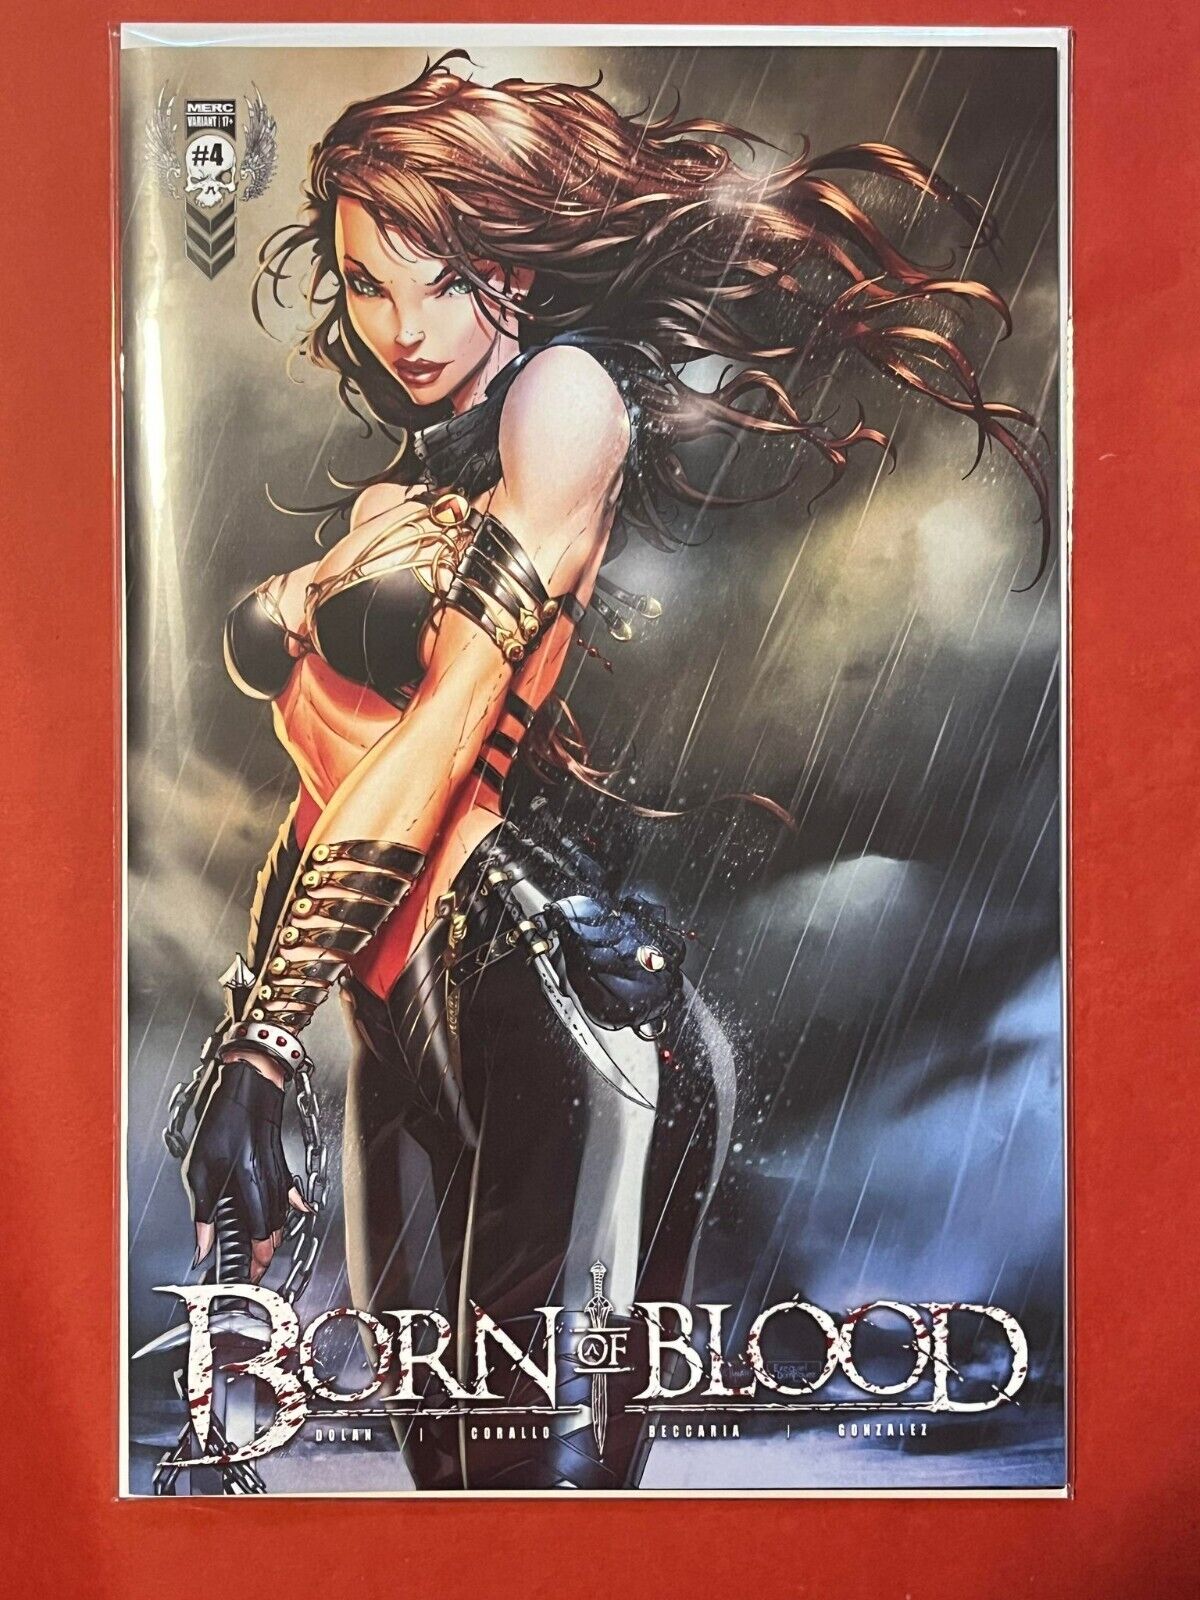 Born of Blood #4 Special Kickstarter Variants, choose your cover